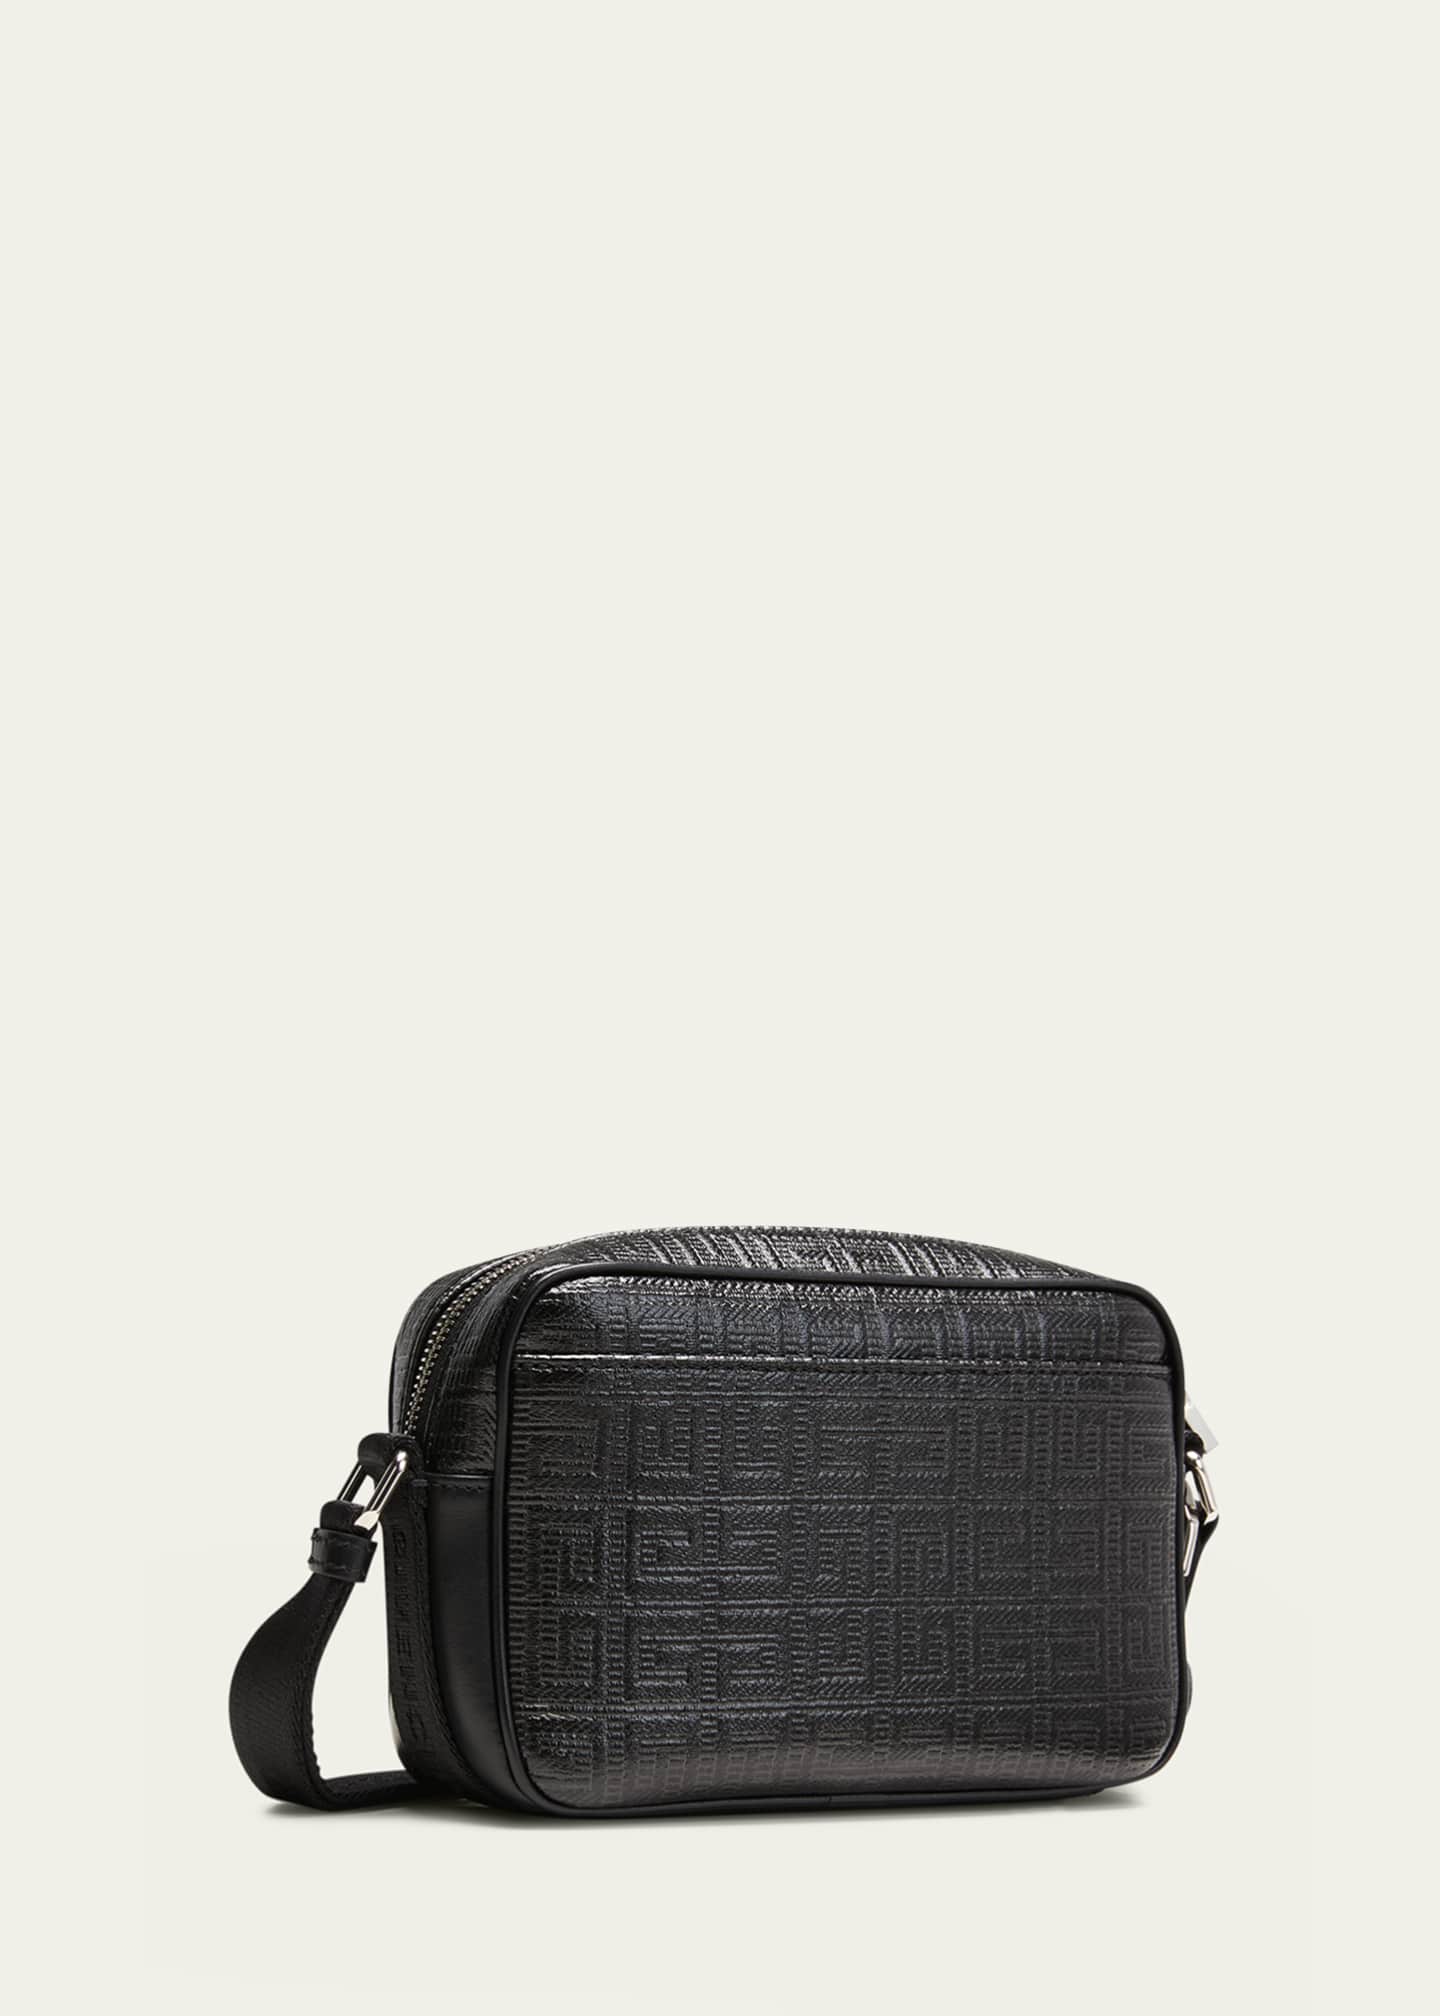 Givenchy Men's 4G-Embossed Logo Crossbody Camera Bag